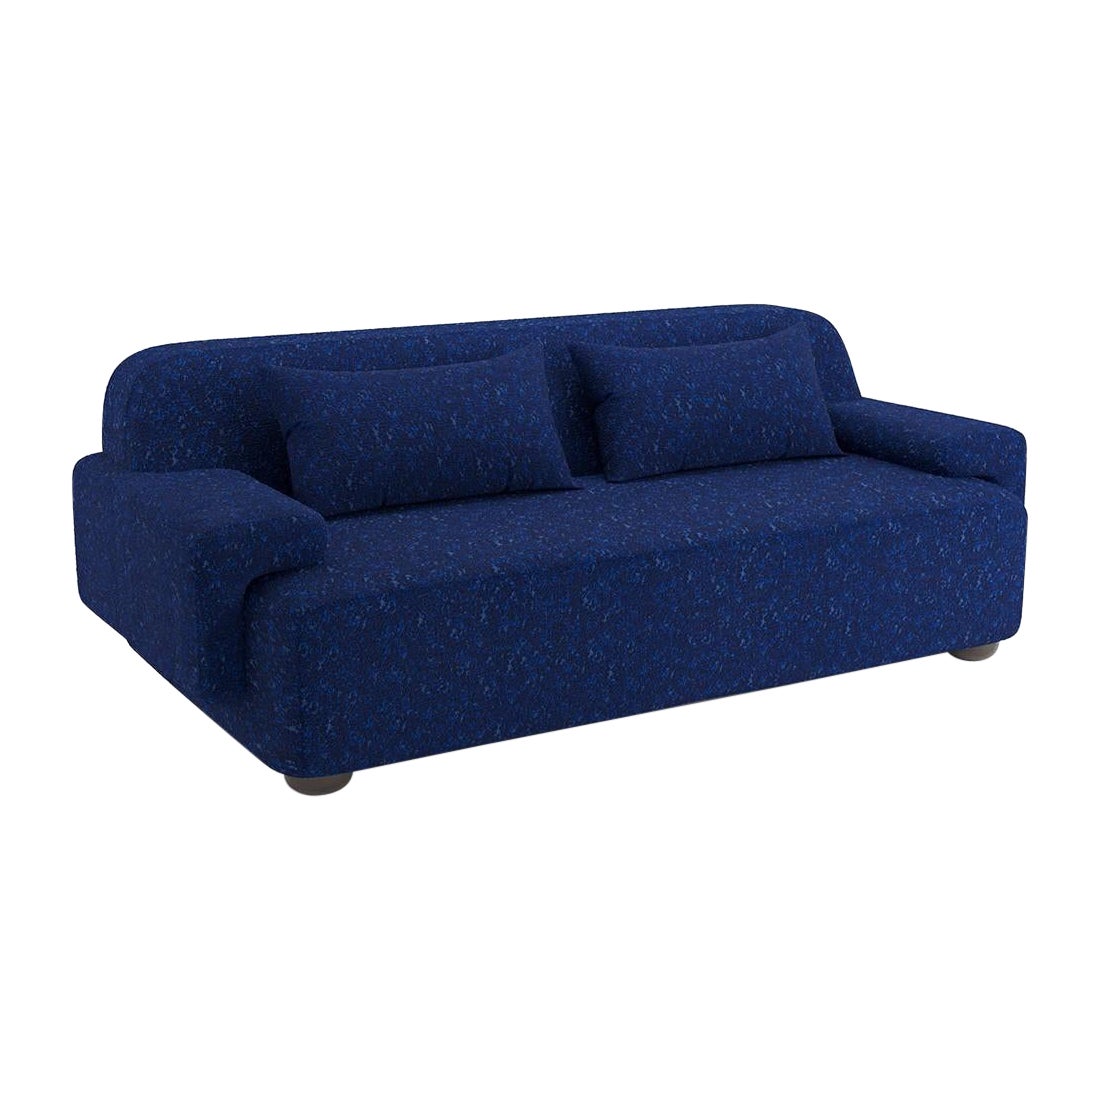 Popus Editions Lena 3 Seater Sofa in Marina Venice Chenille Velvet Upholstery